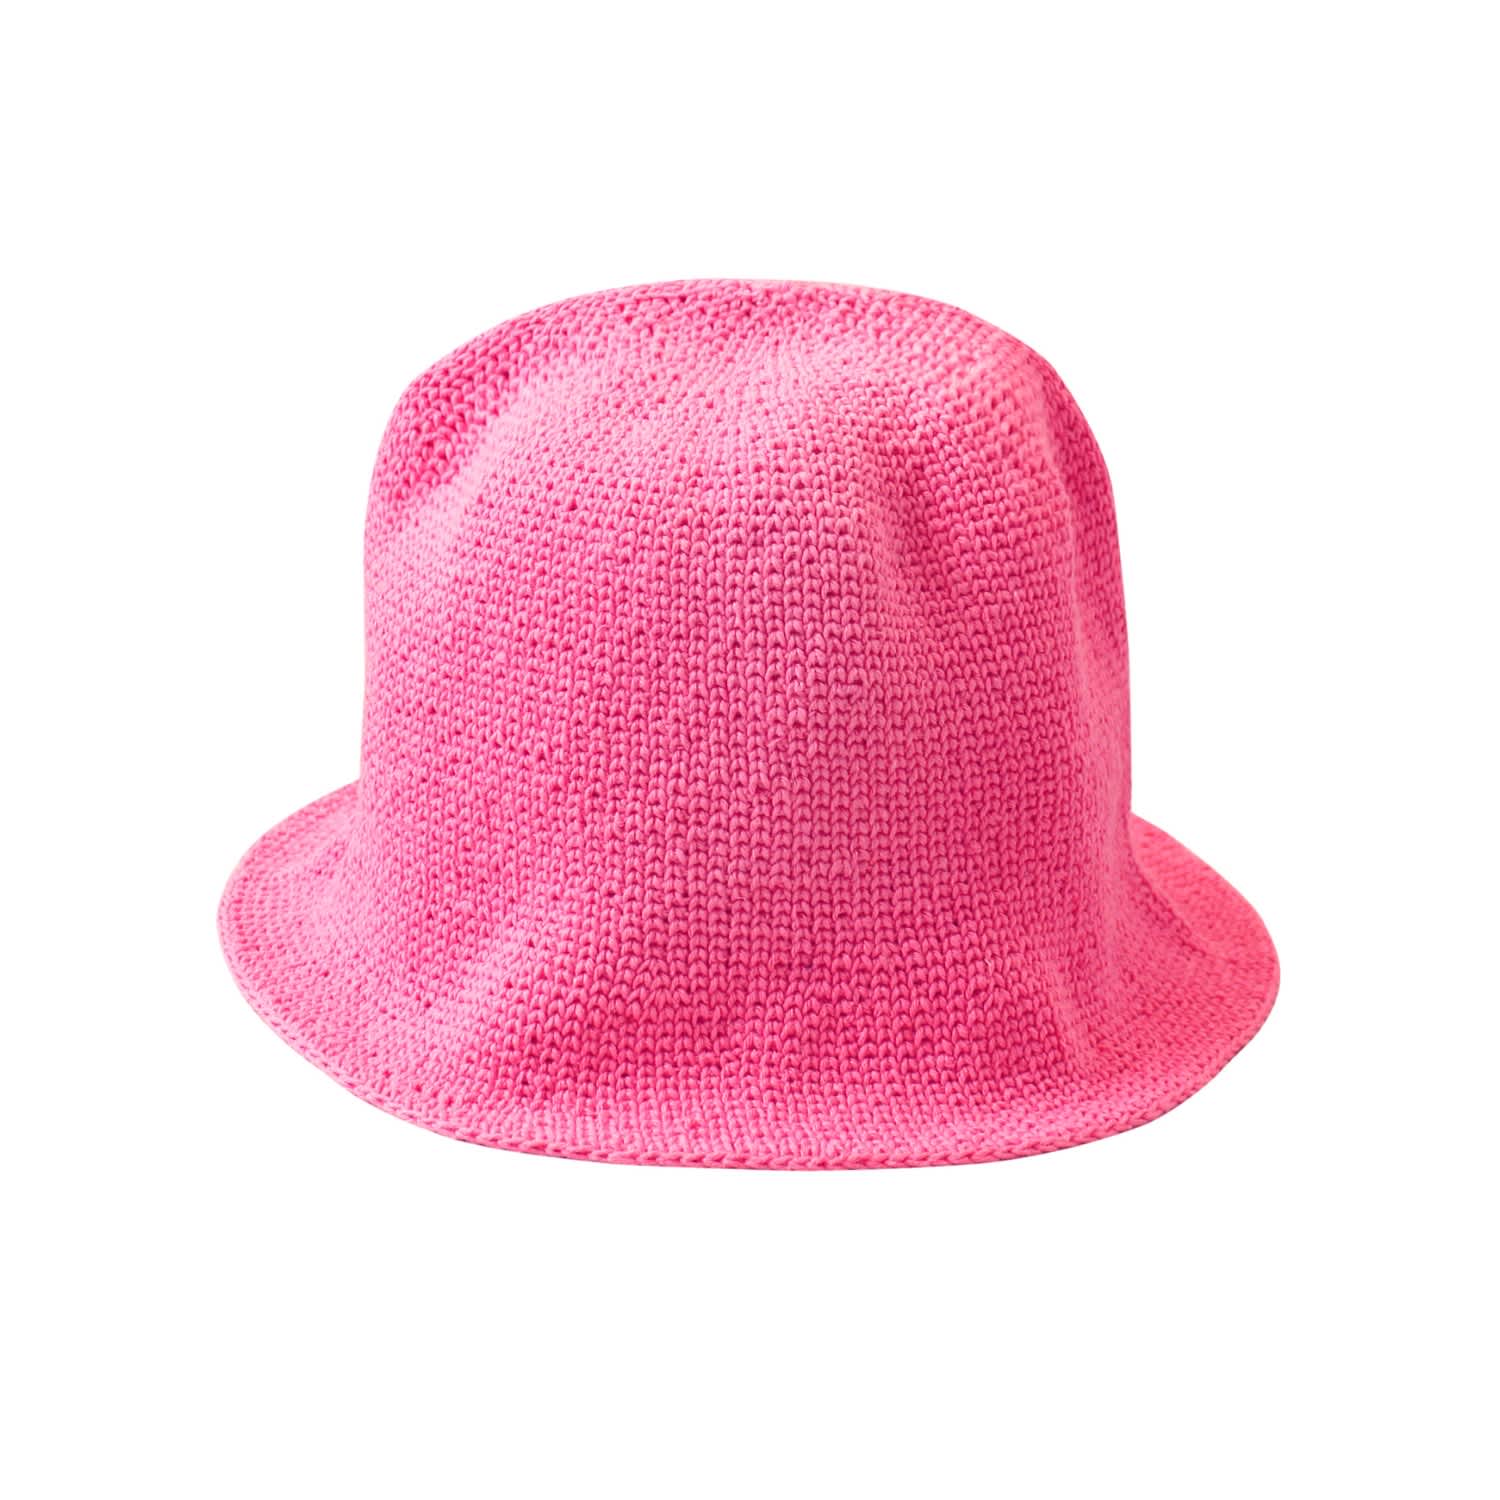 Malibu - Crochet Weave Toquilla Straw Bucket Hat | Artesano, Hot Pink/Tomato Red / S: 54 cm